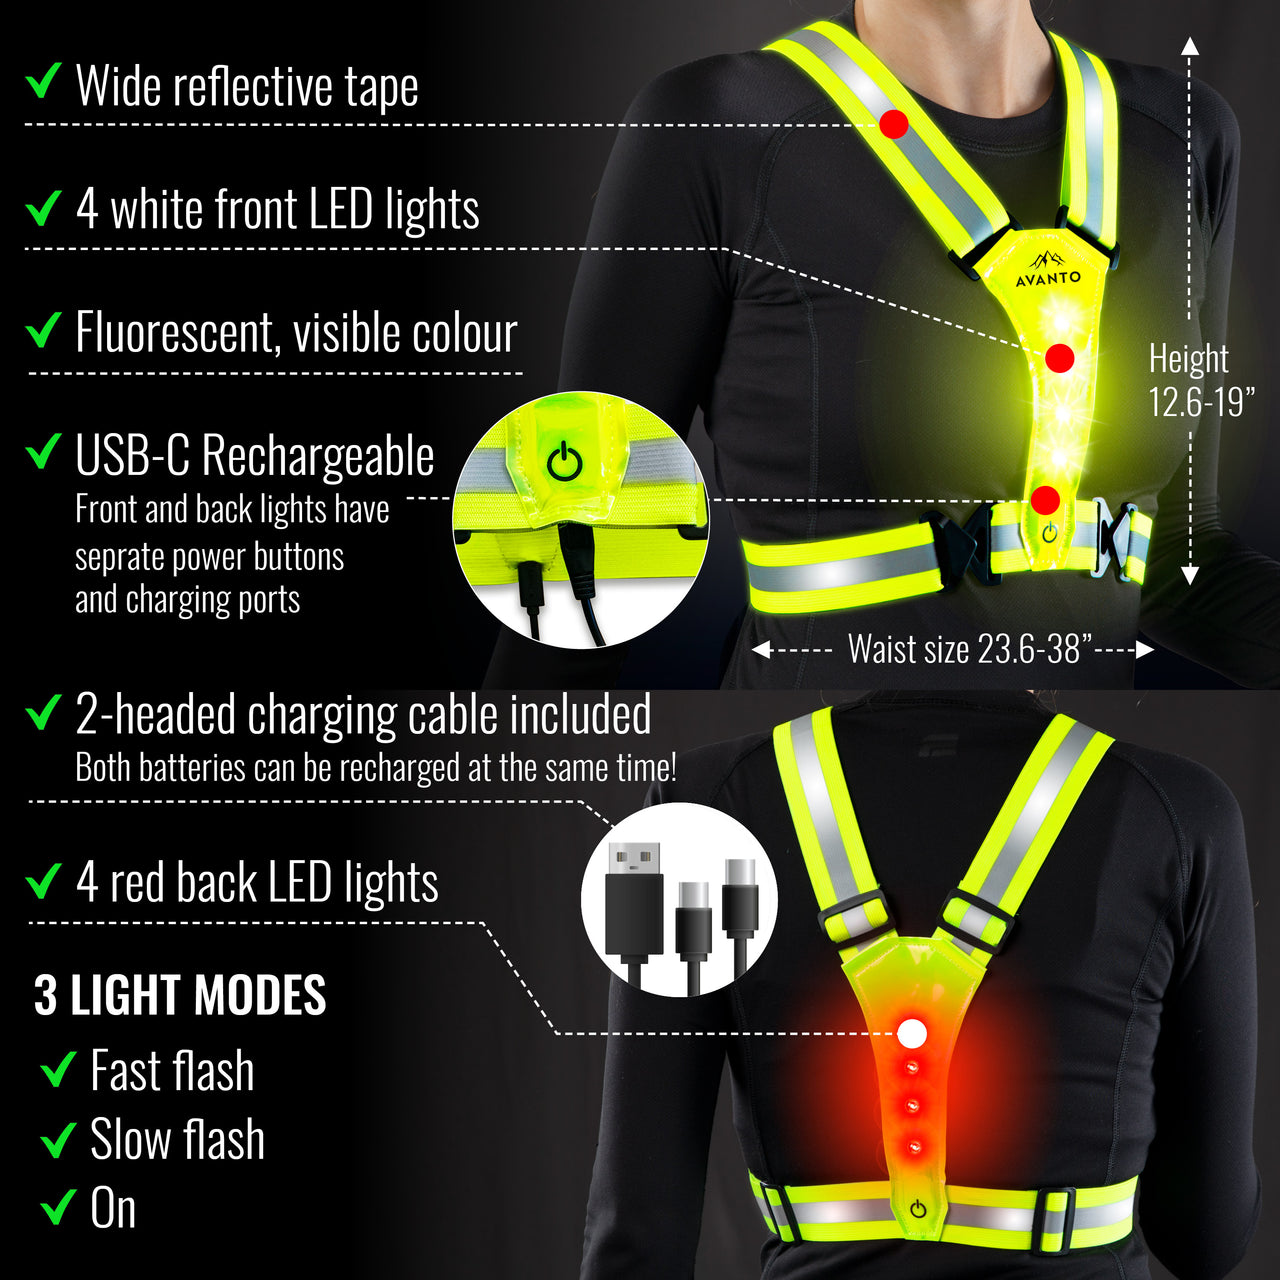 Avanto Lifestyle Avanto LED Reflective Vest, Original, USB-C Rechargeable LED Running Vest, High Visibility Running Vest with Light, Running Lights